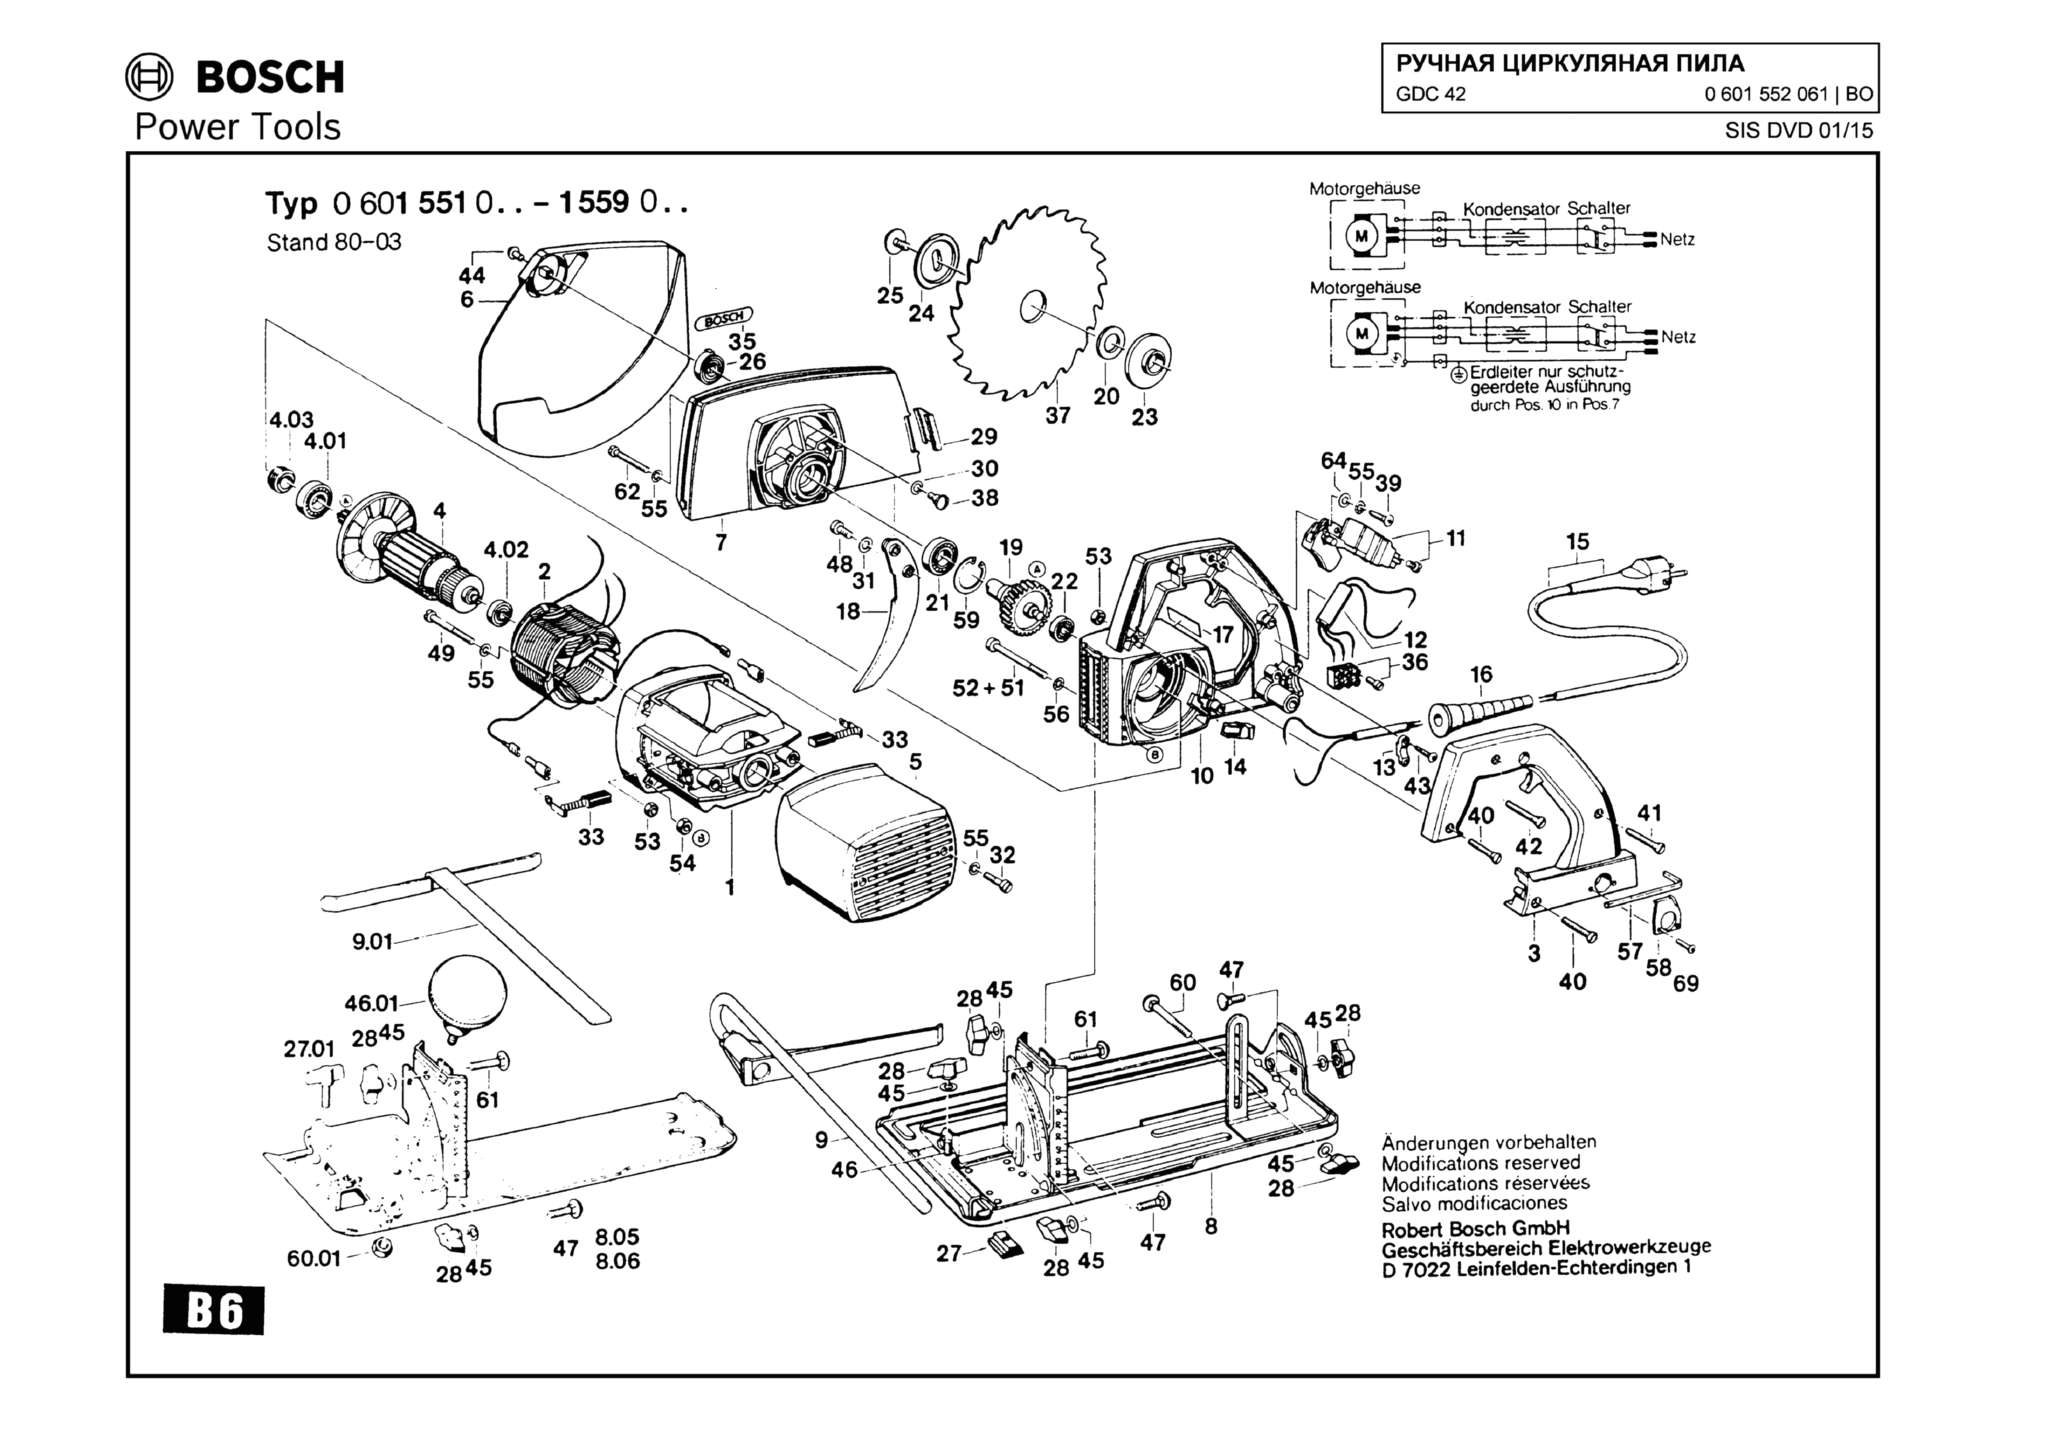 Запчасти, схема и деталировка Bosch GDC 42 (ТИП 0601552061)